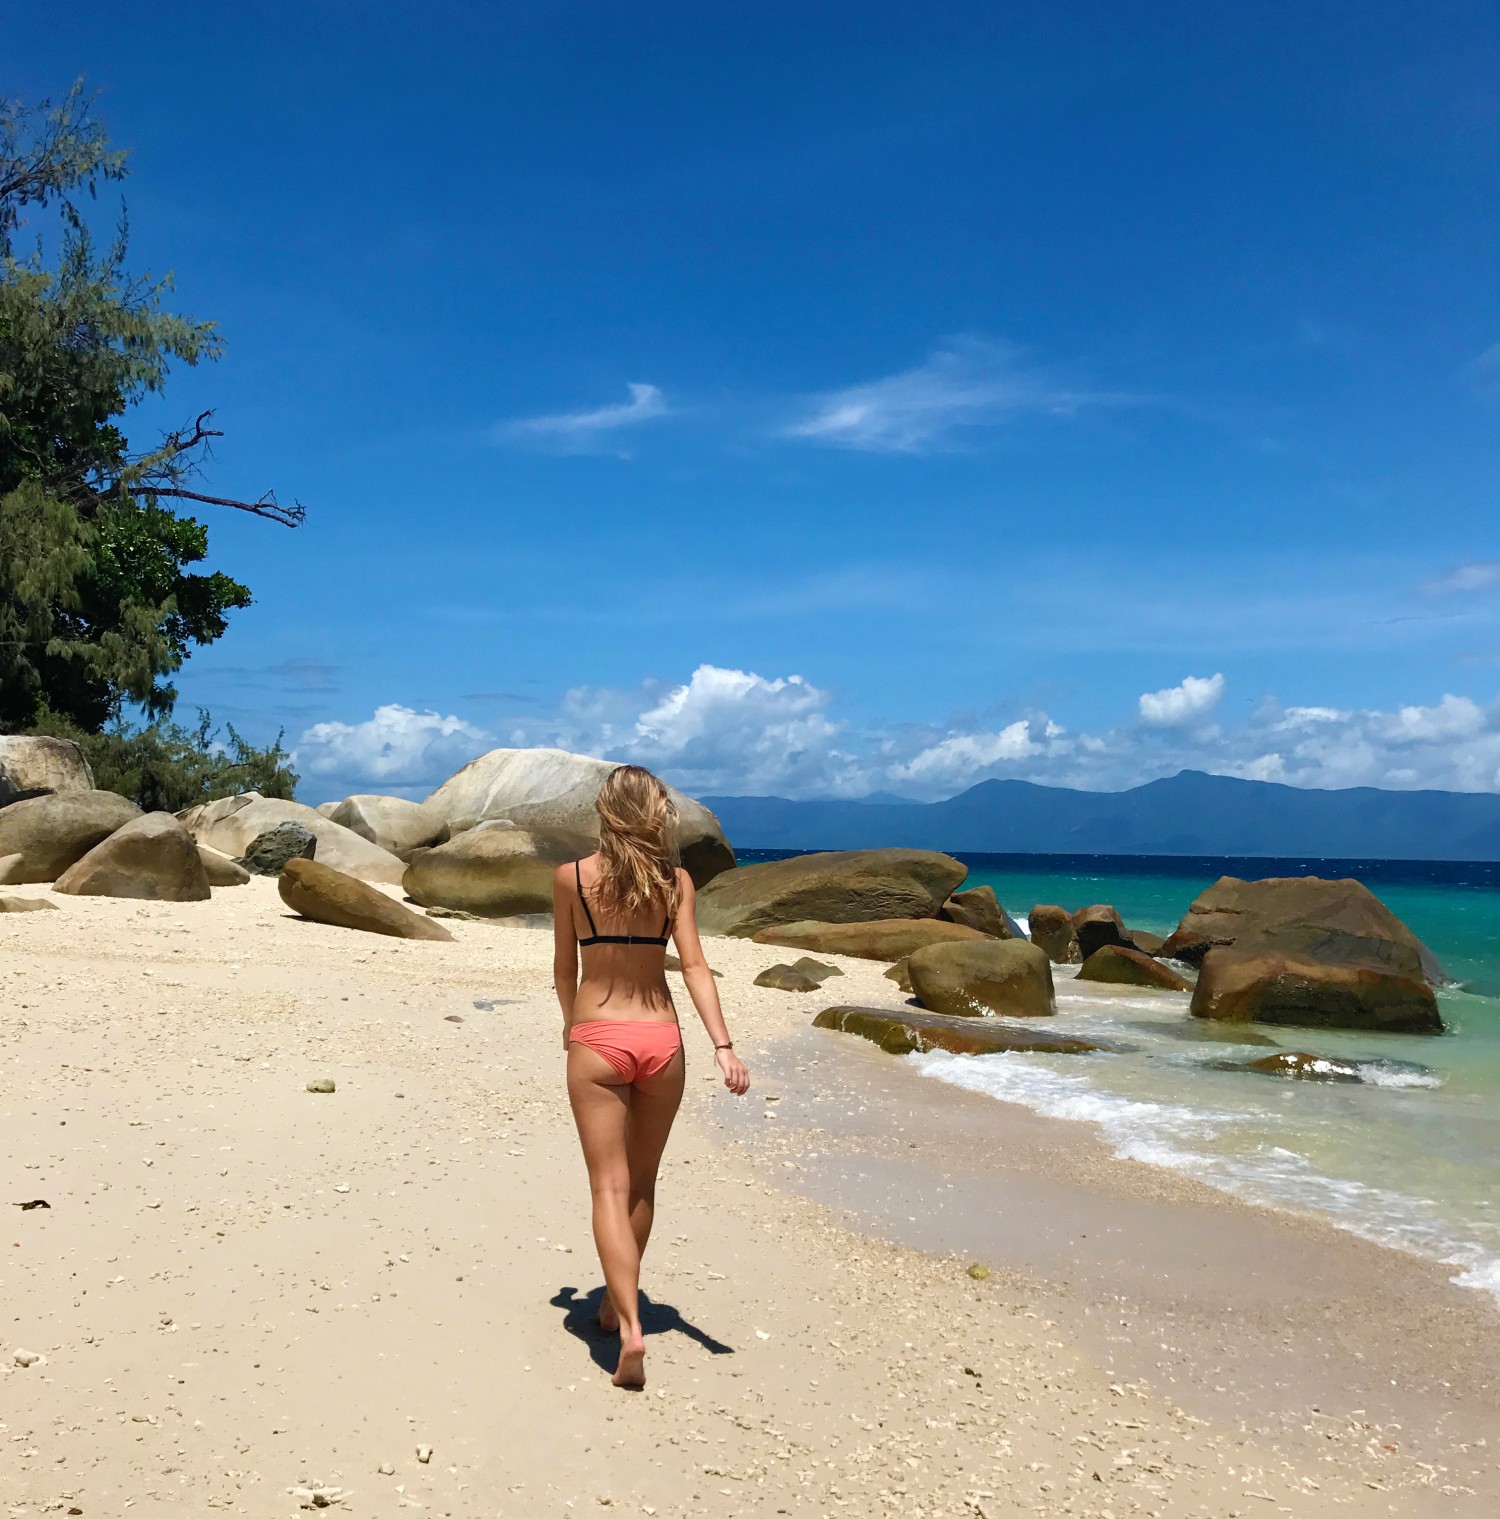 a-day-on-a-tropical-island-bikini-walk-2